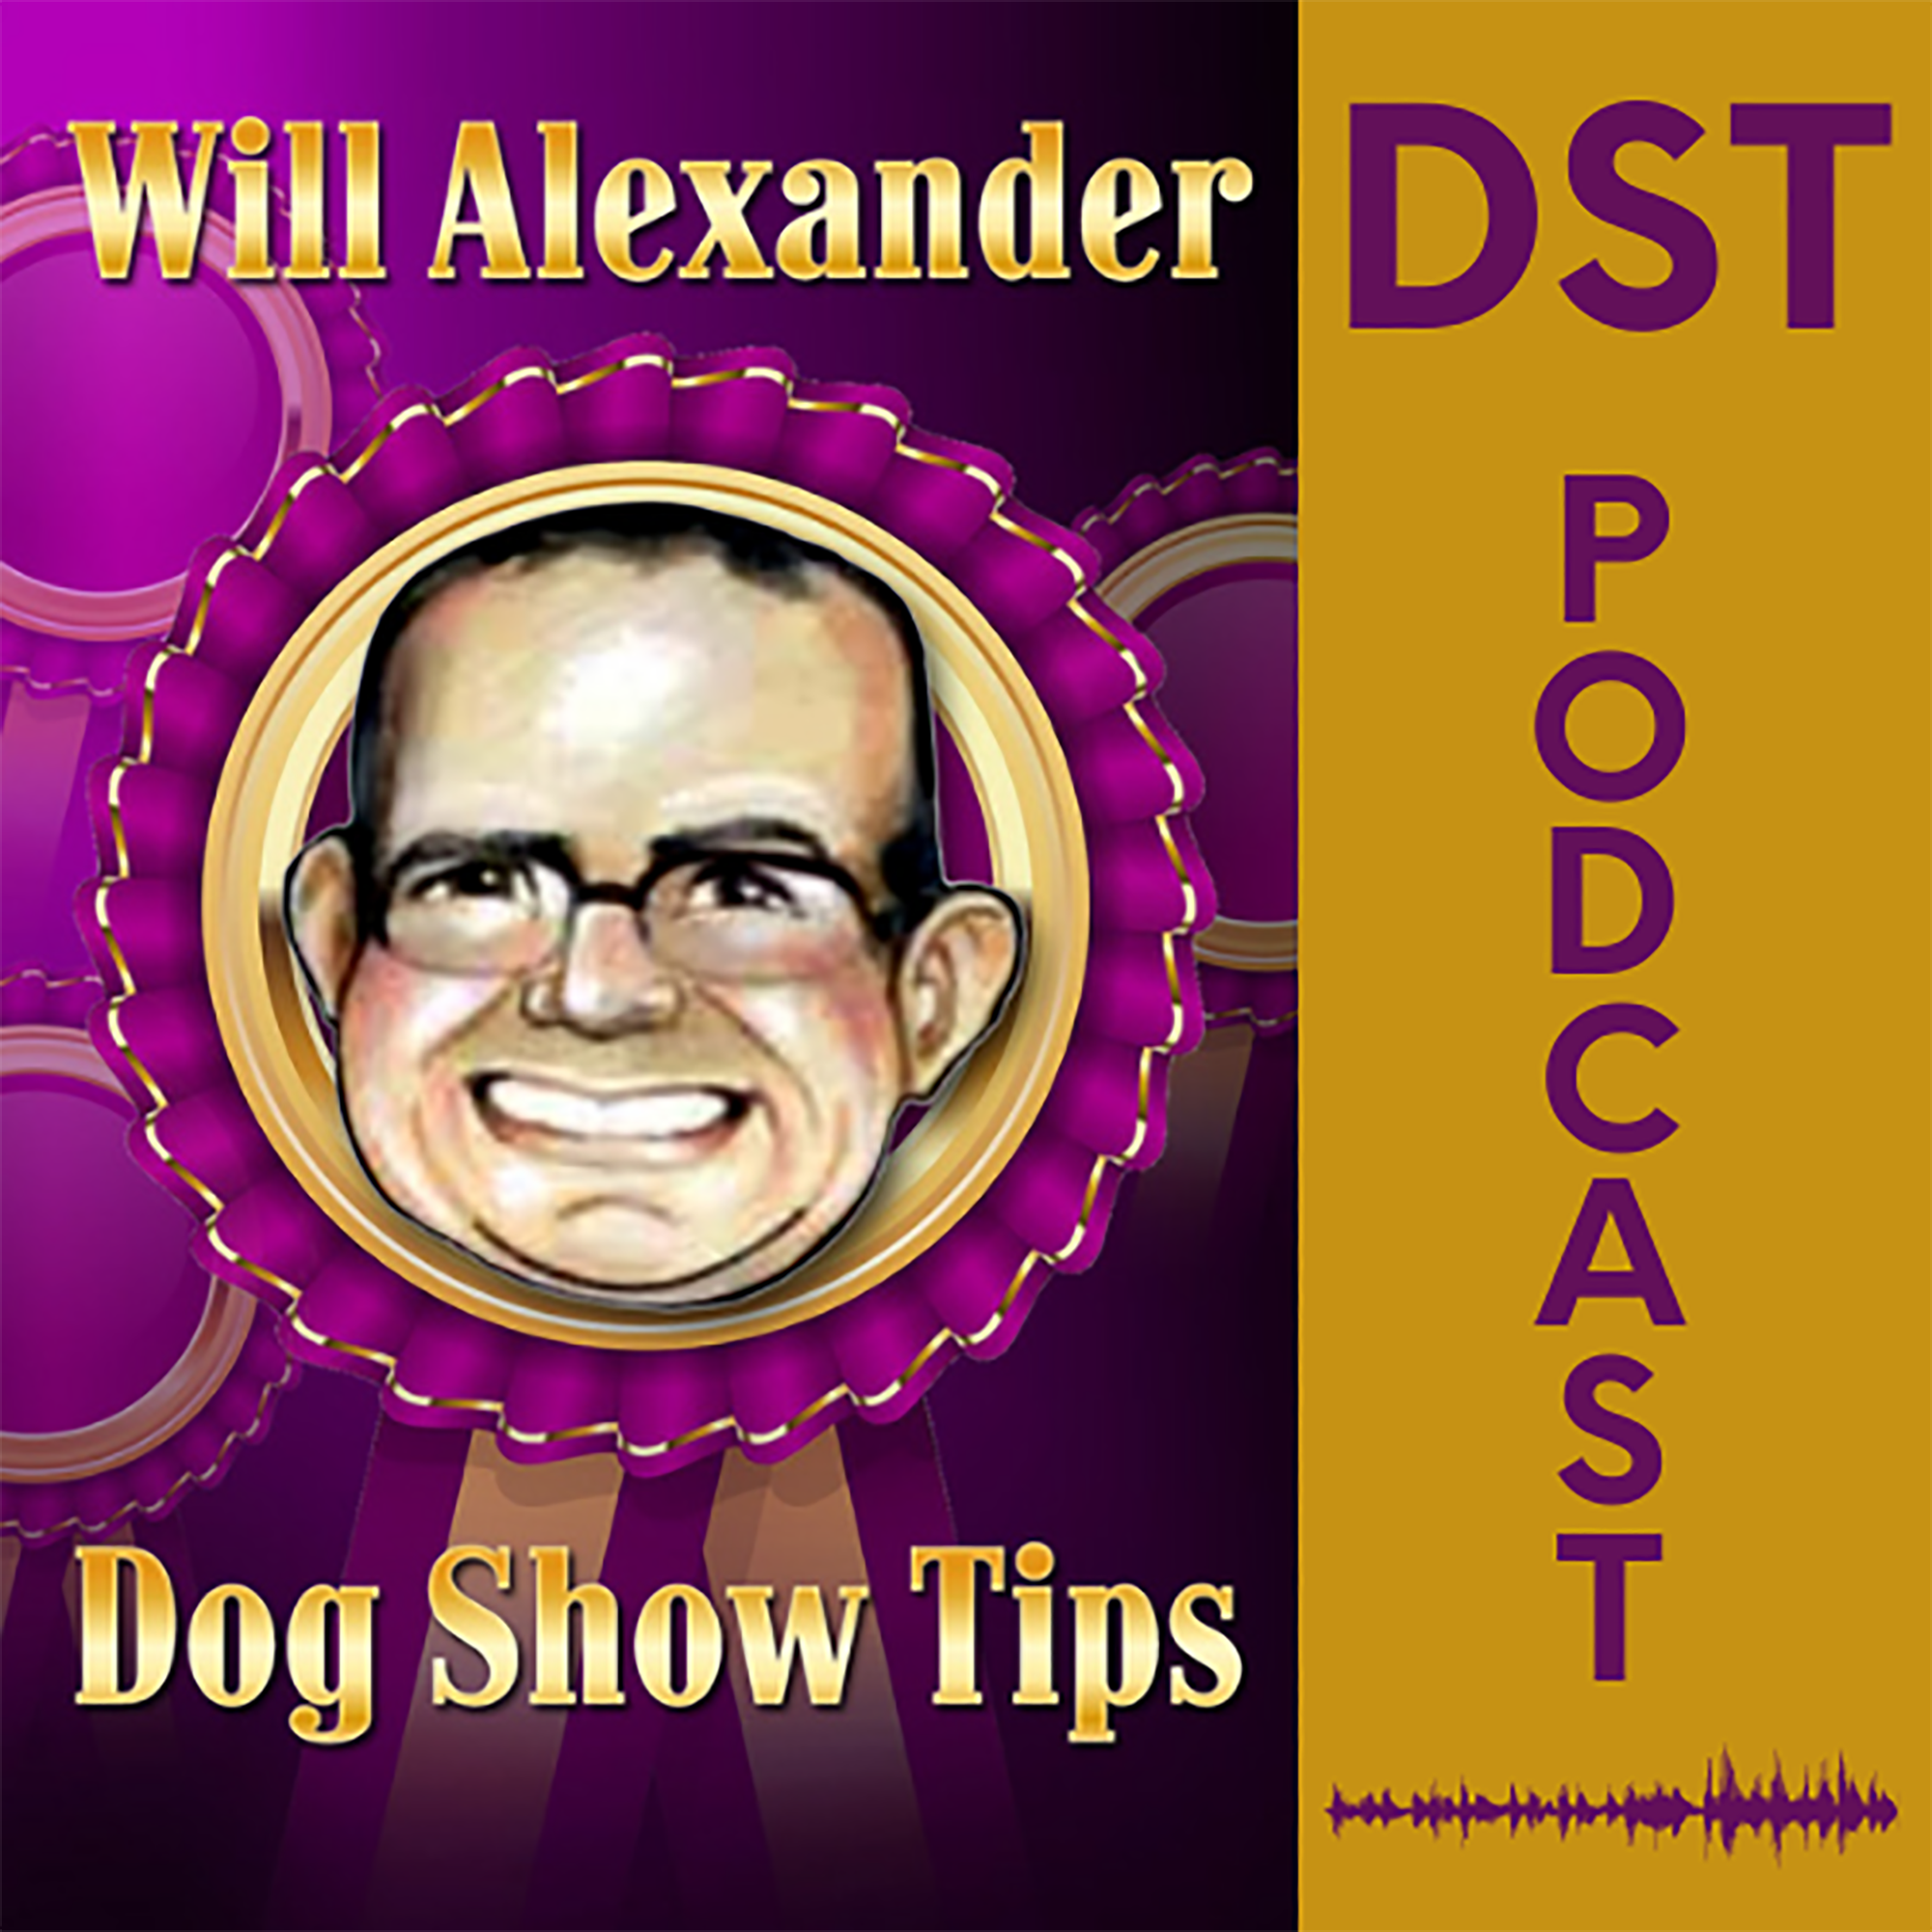 DST Podcast- Ernesto Lara Interview with Will Alexander